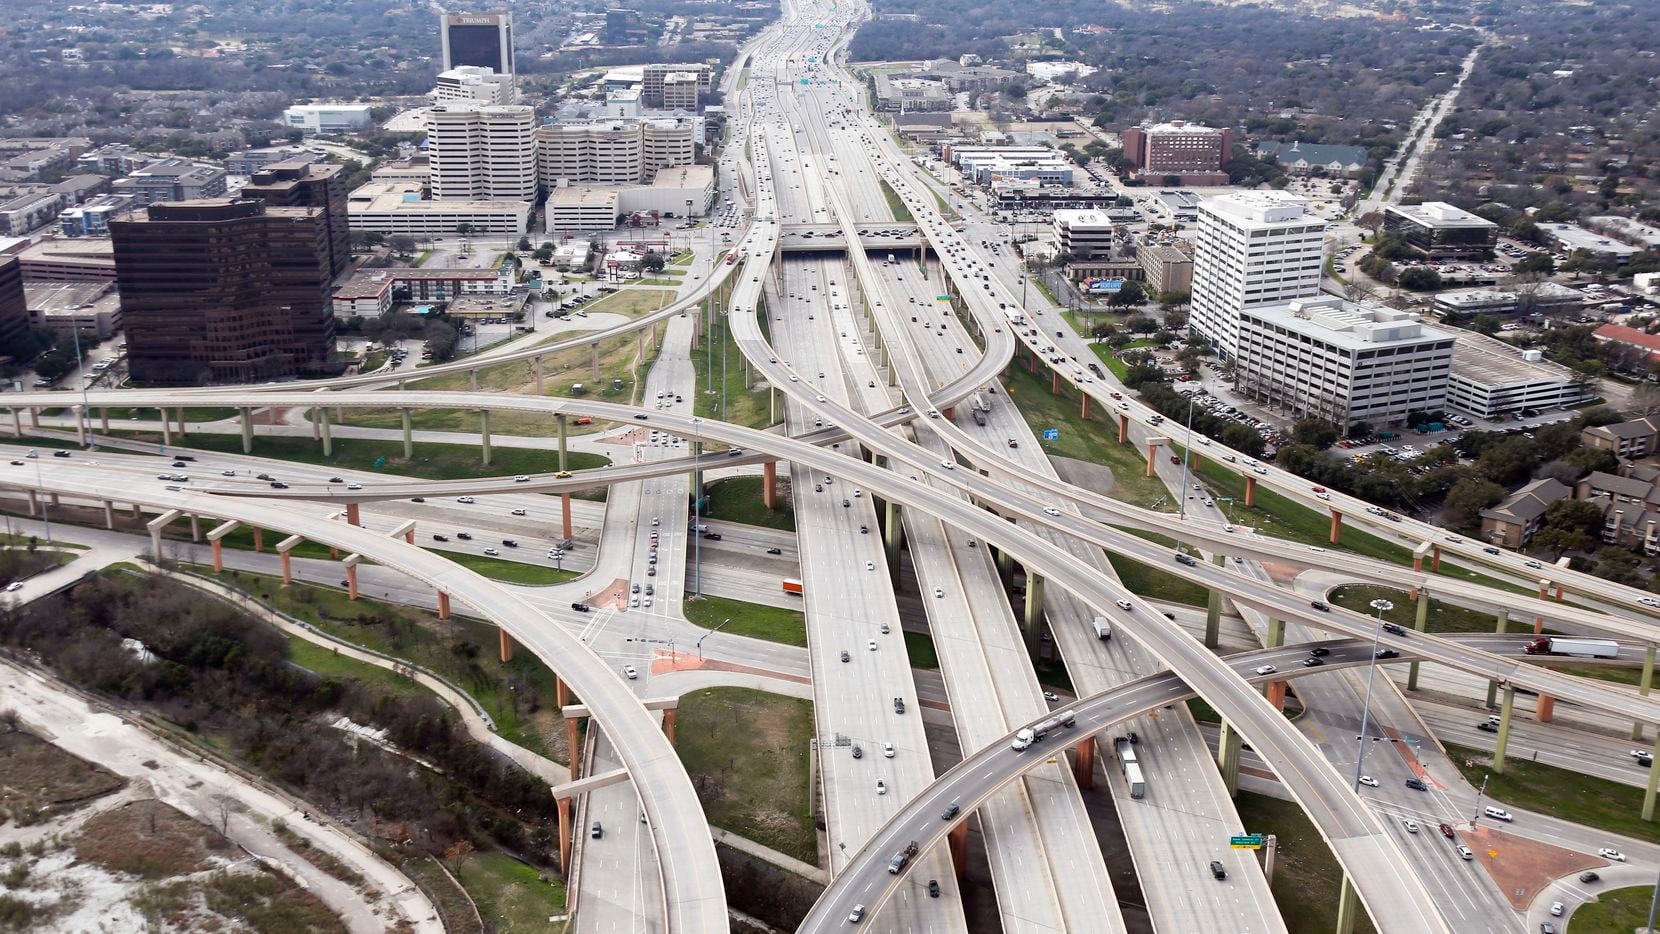 The High Five interchange in Dallas.